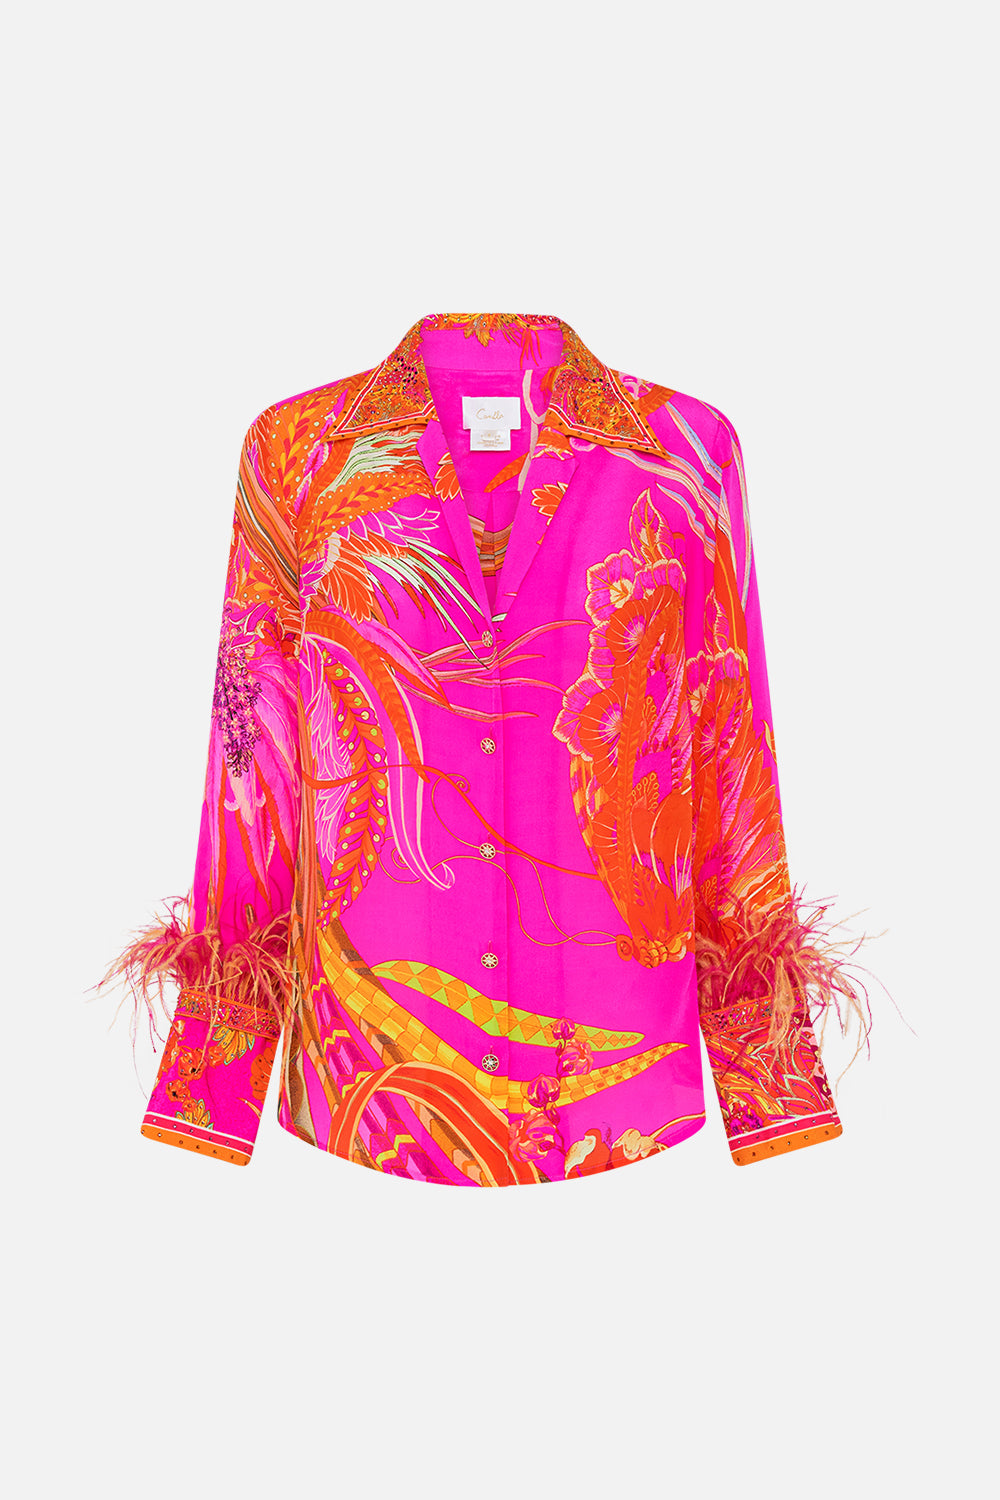 CAMILLA luxury silk shirt in a Heart That Flutters